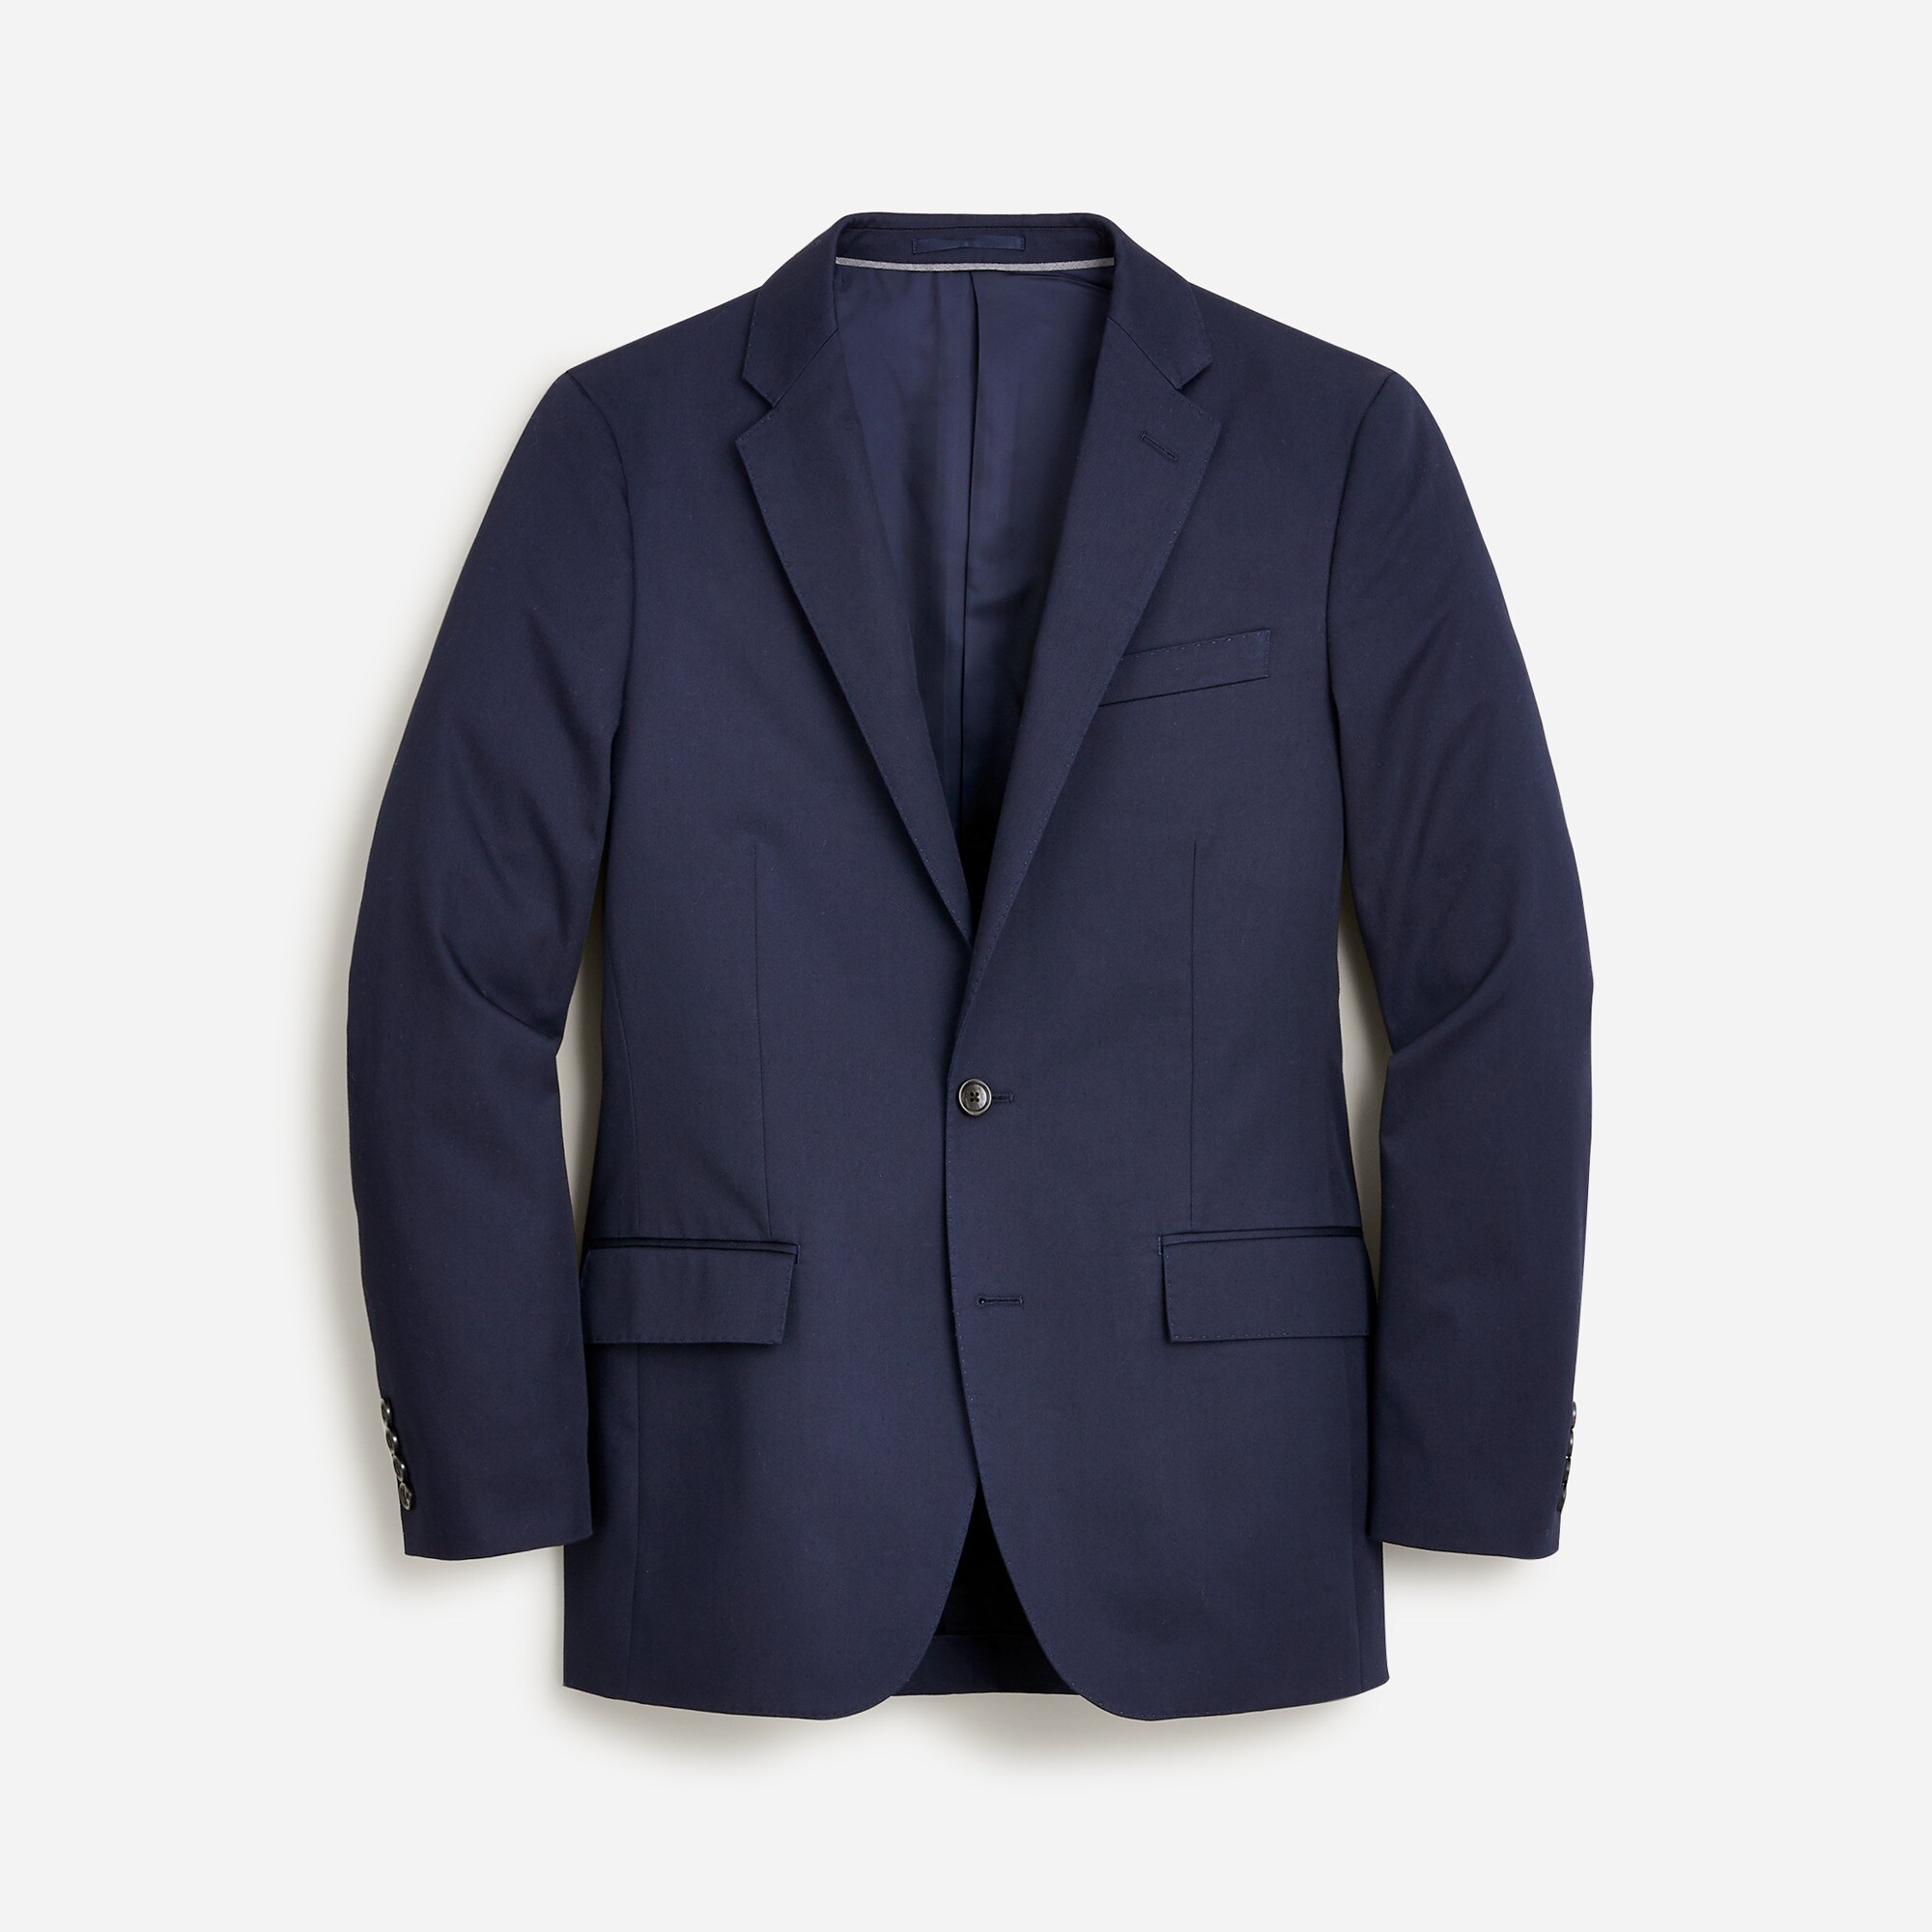  Ludlow Slim-fit suit jacket in Italian chino